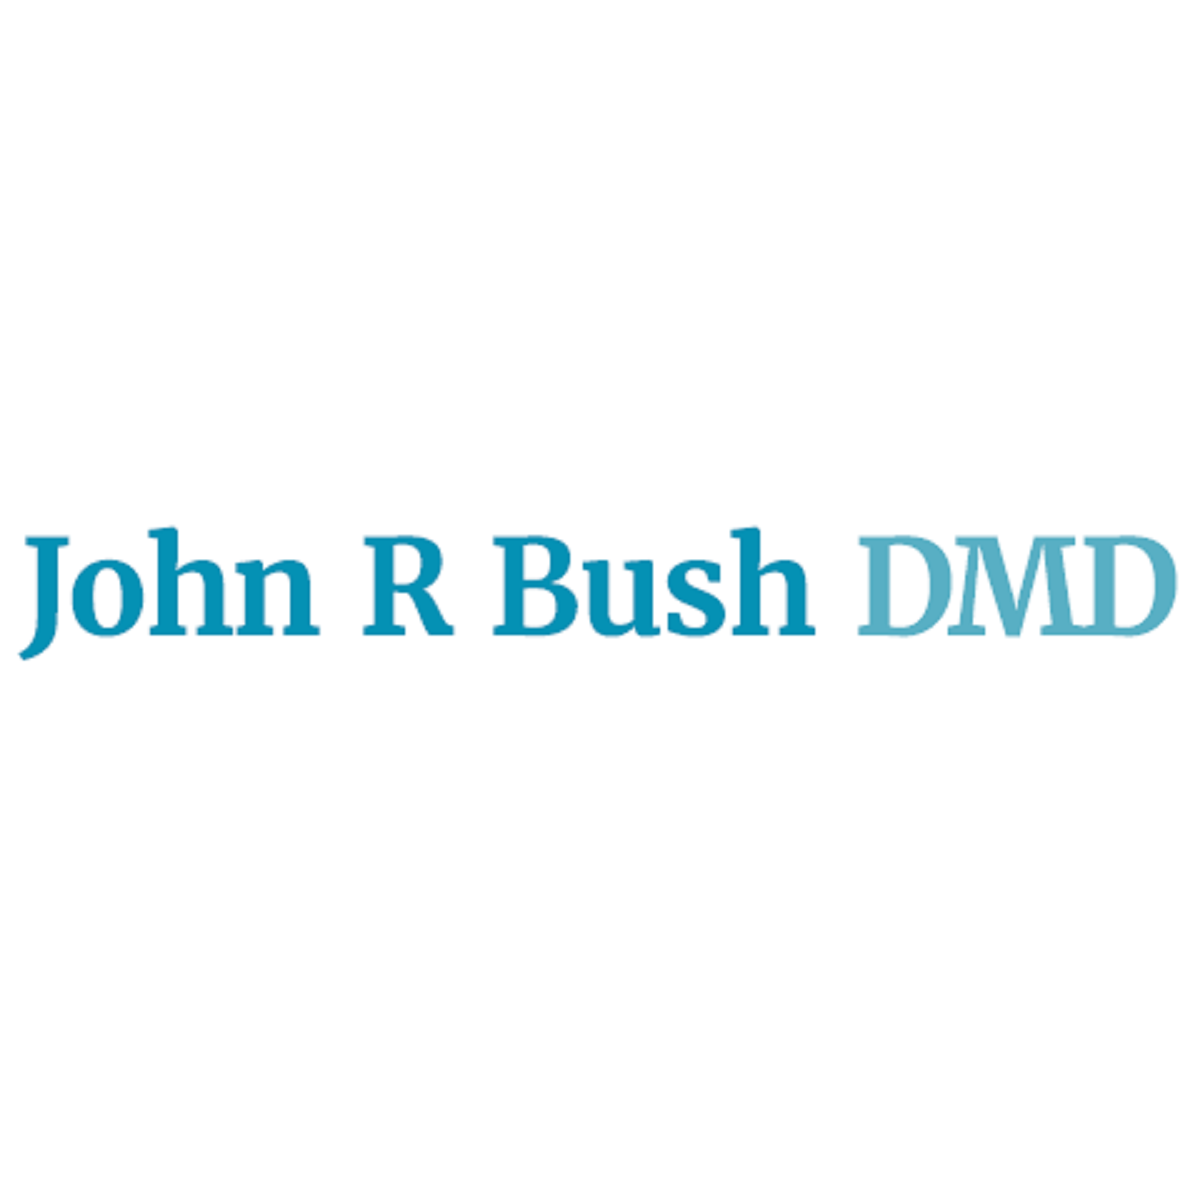 John R Bush DMD Pittsburgh (412)471-4552